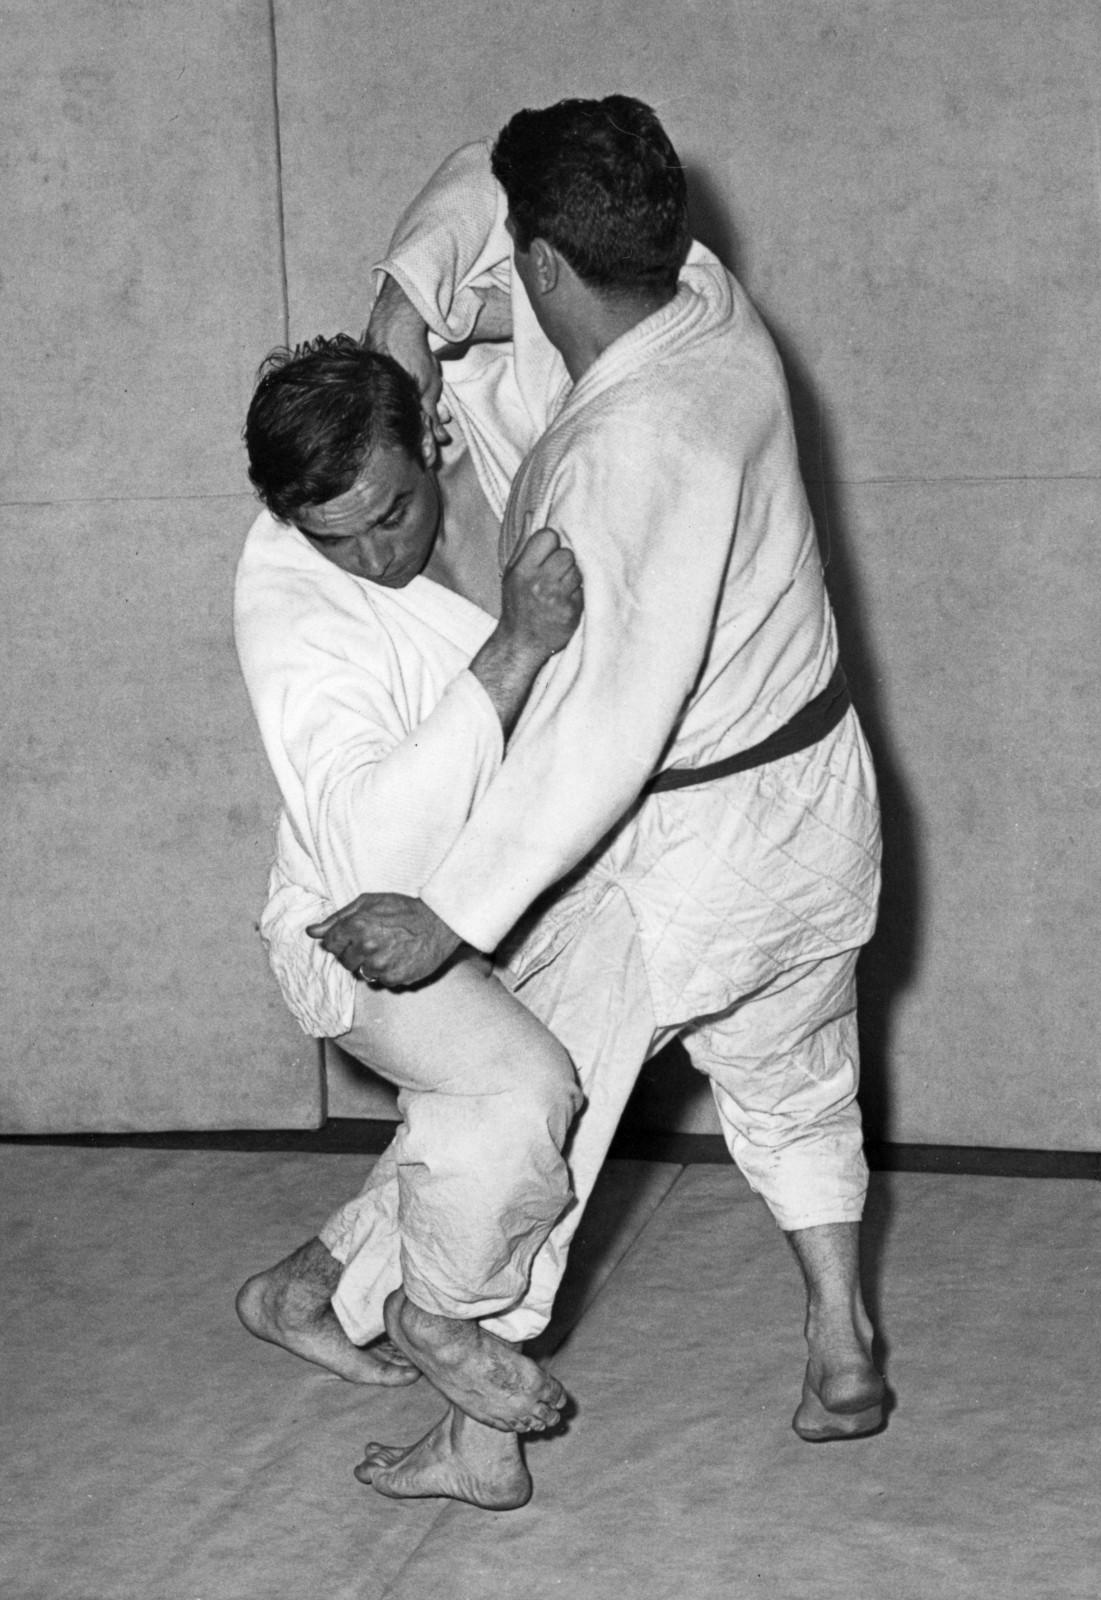 Judo hold demonstration